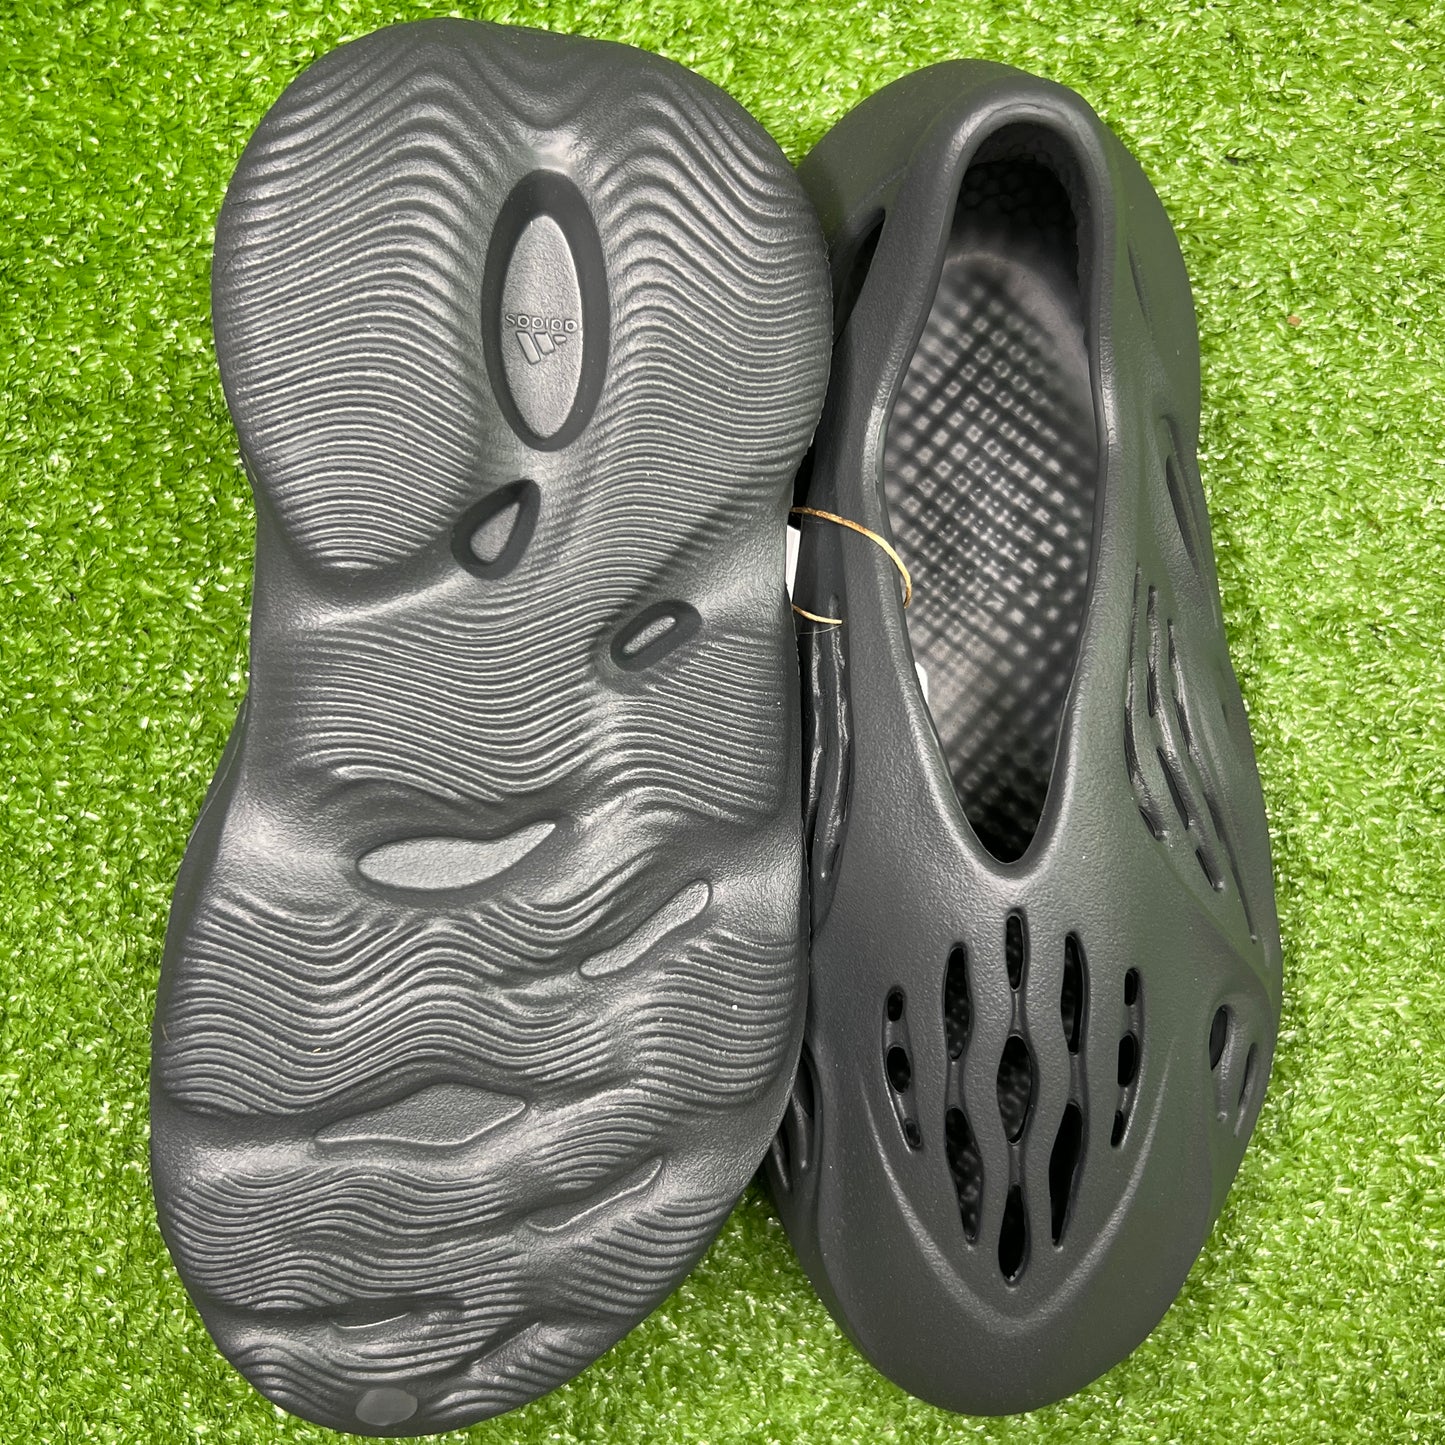 adidas Yeezy Foam Runner “Carbon”